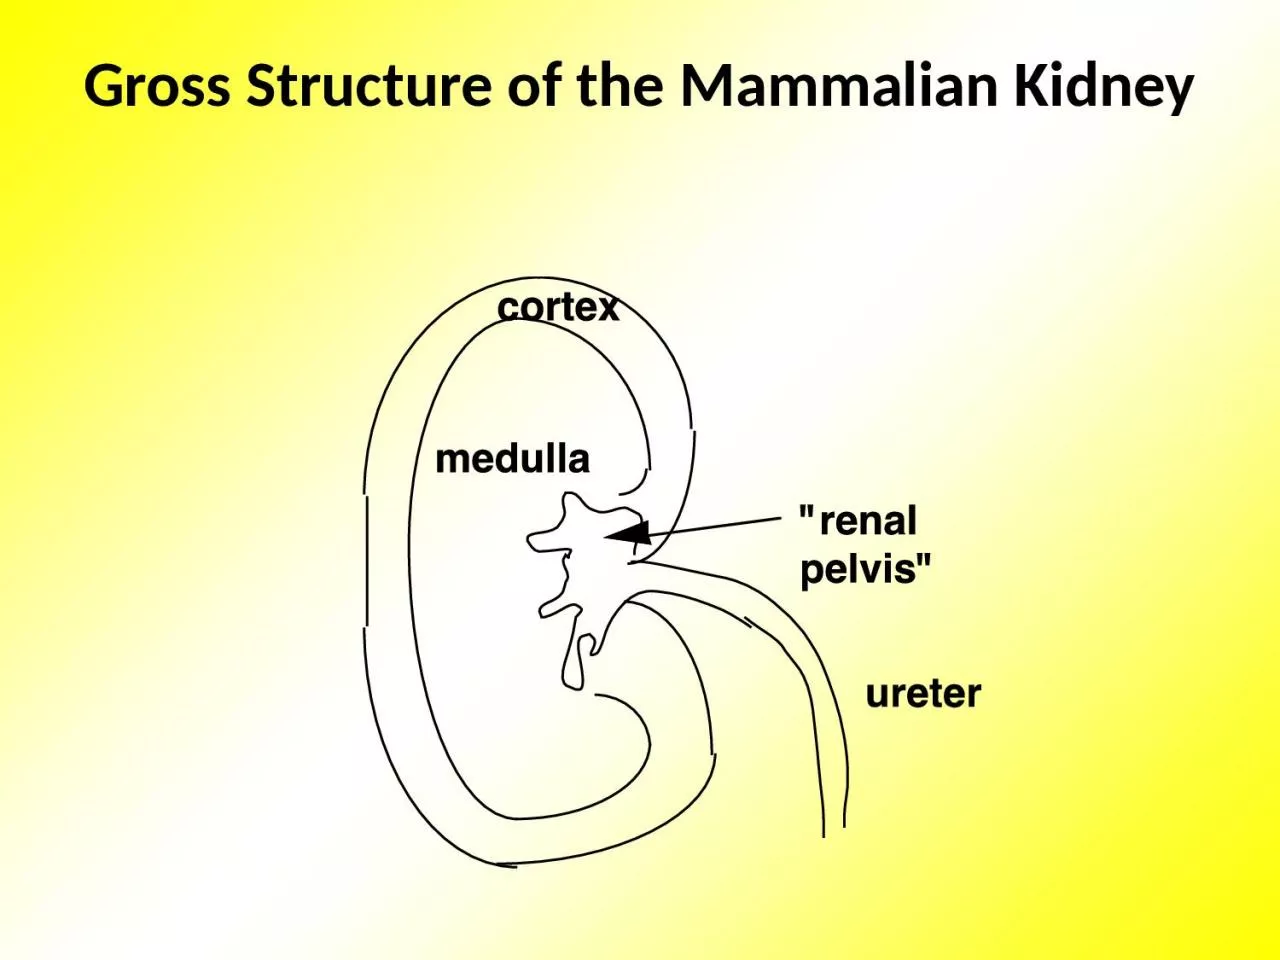 Gross Structure of the Mammalian Kidney